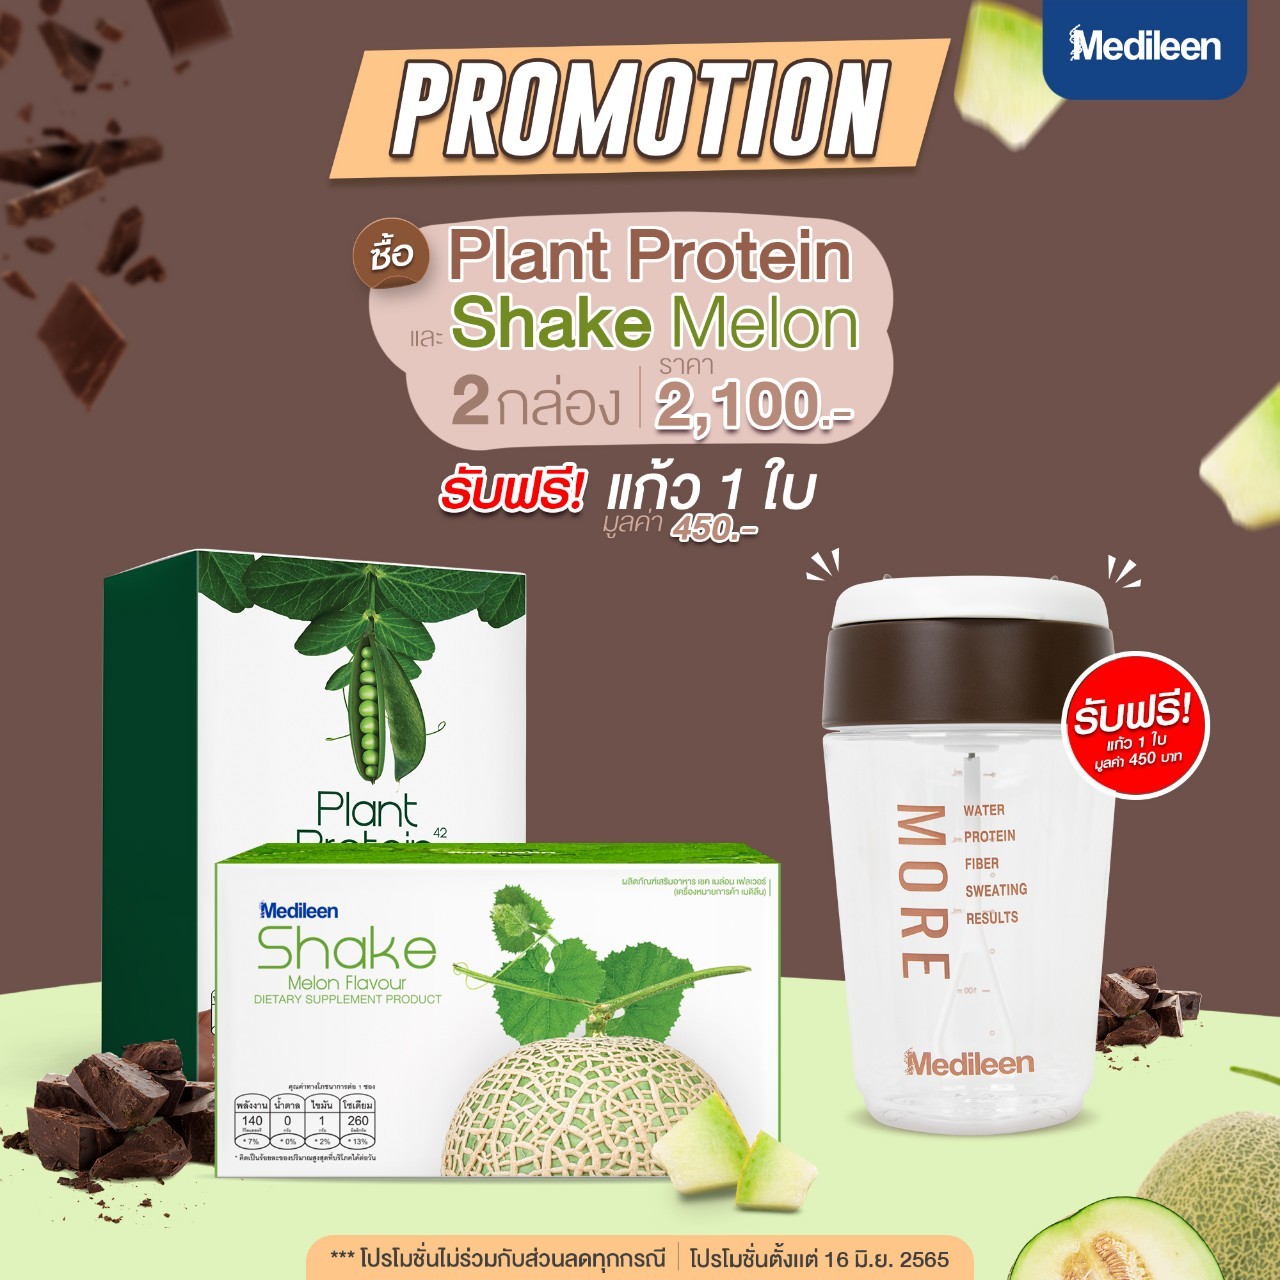 Plant Protein 1 melon 1 chocolate